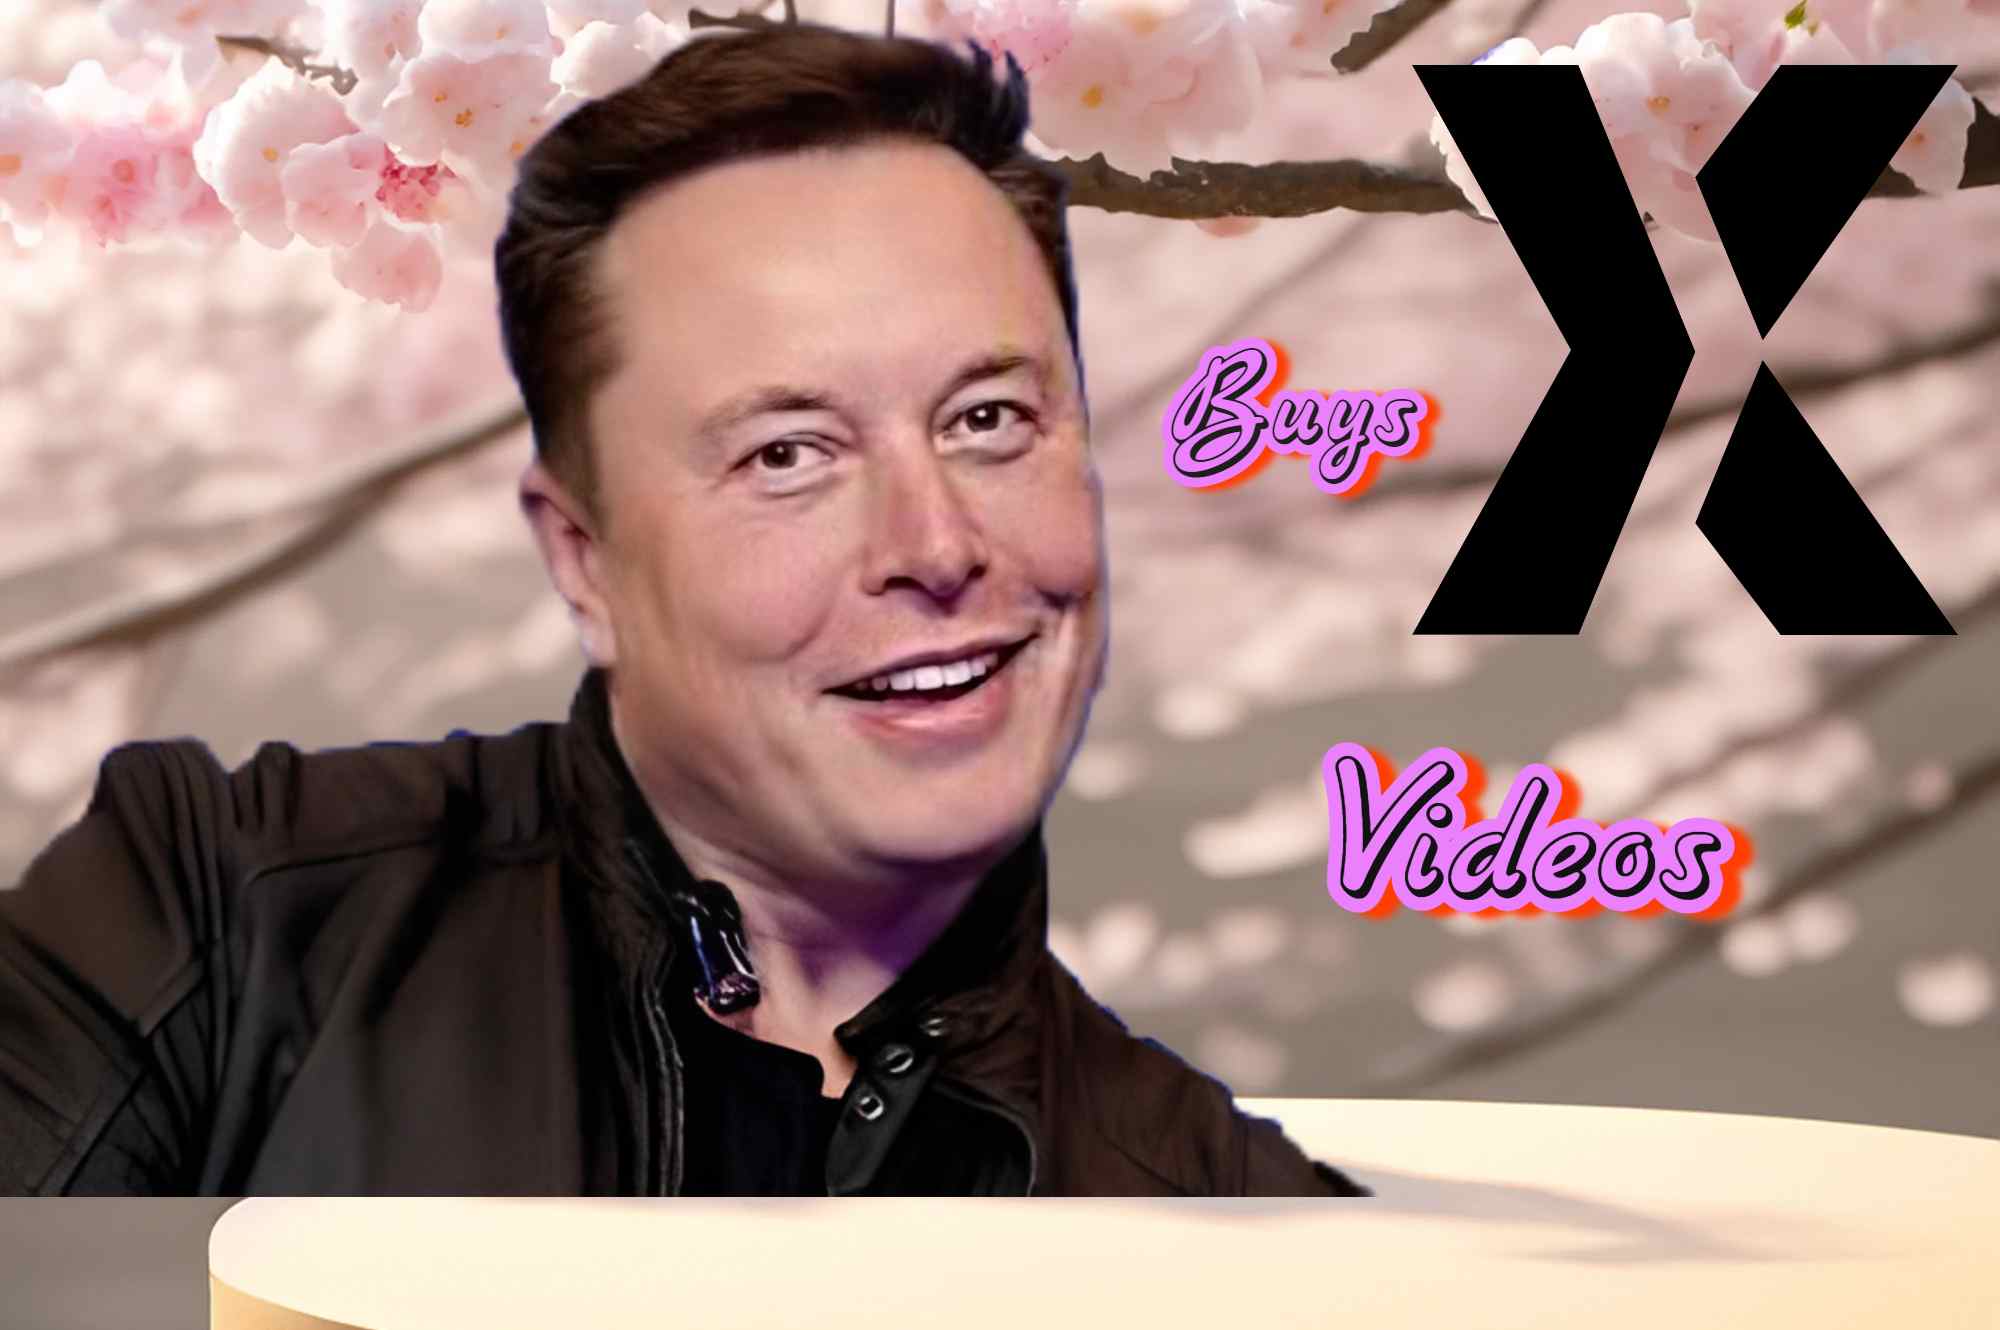 Elon Musk Buys xvideos